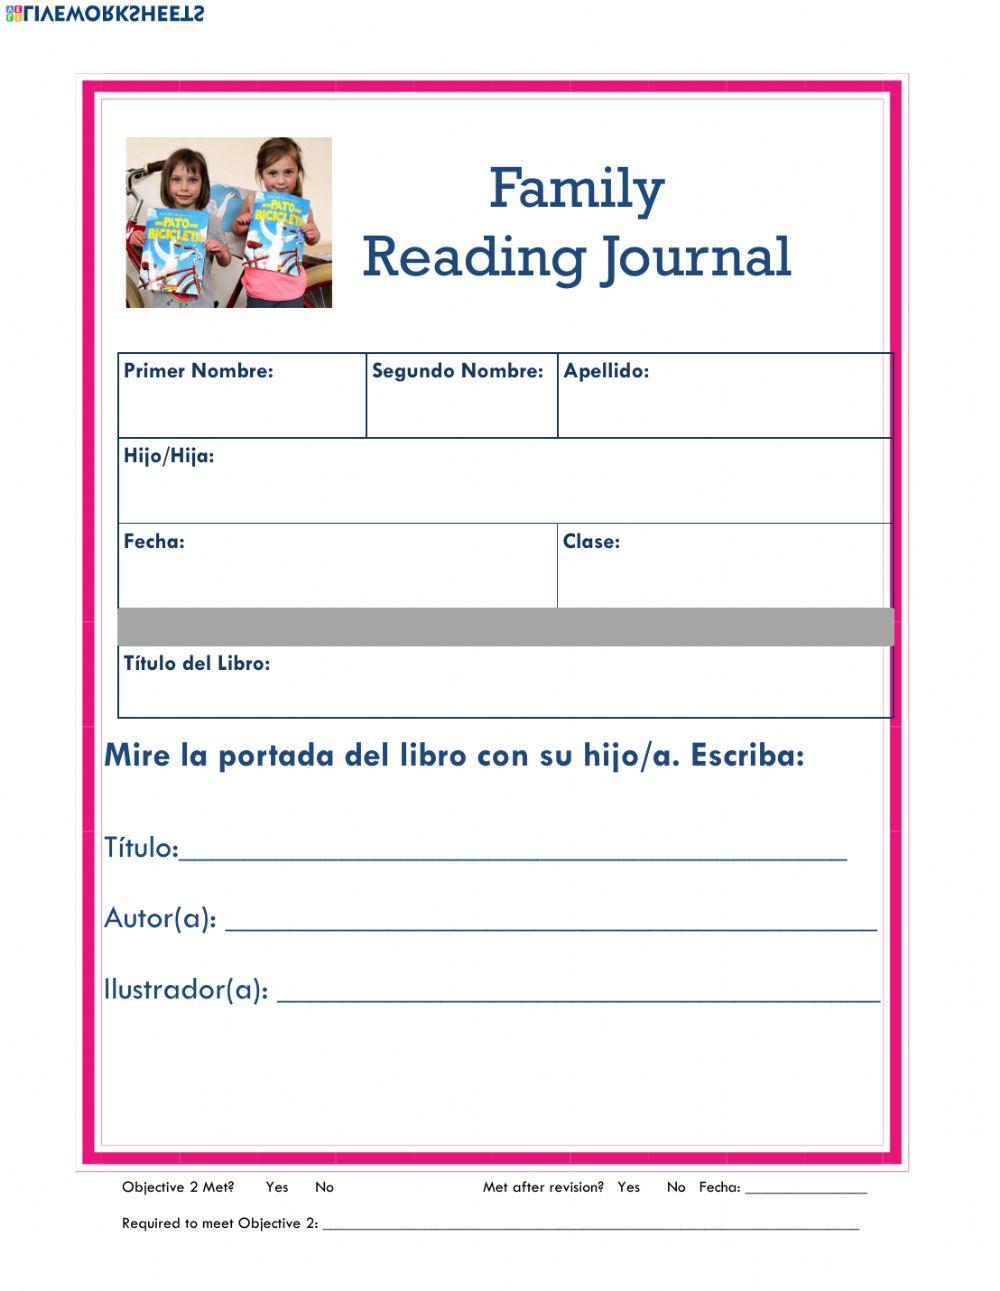 Reading Journal 2 - Spanish